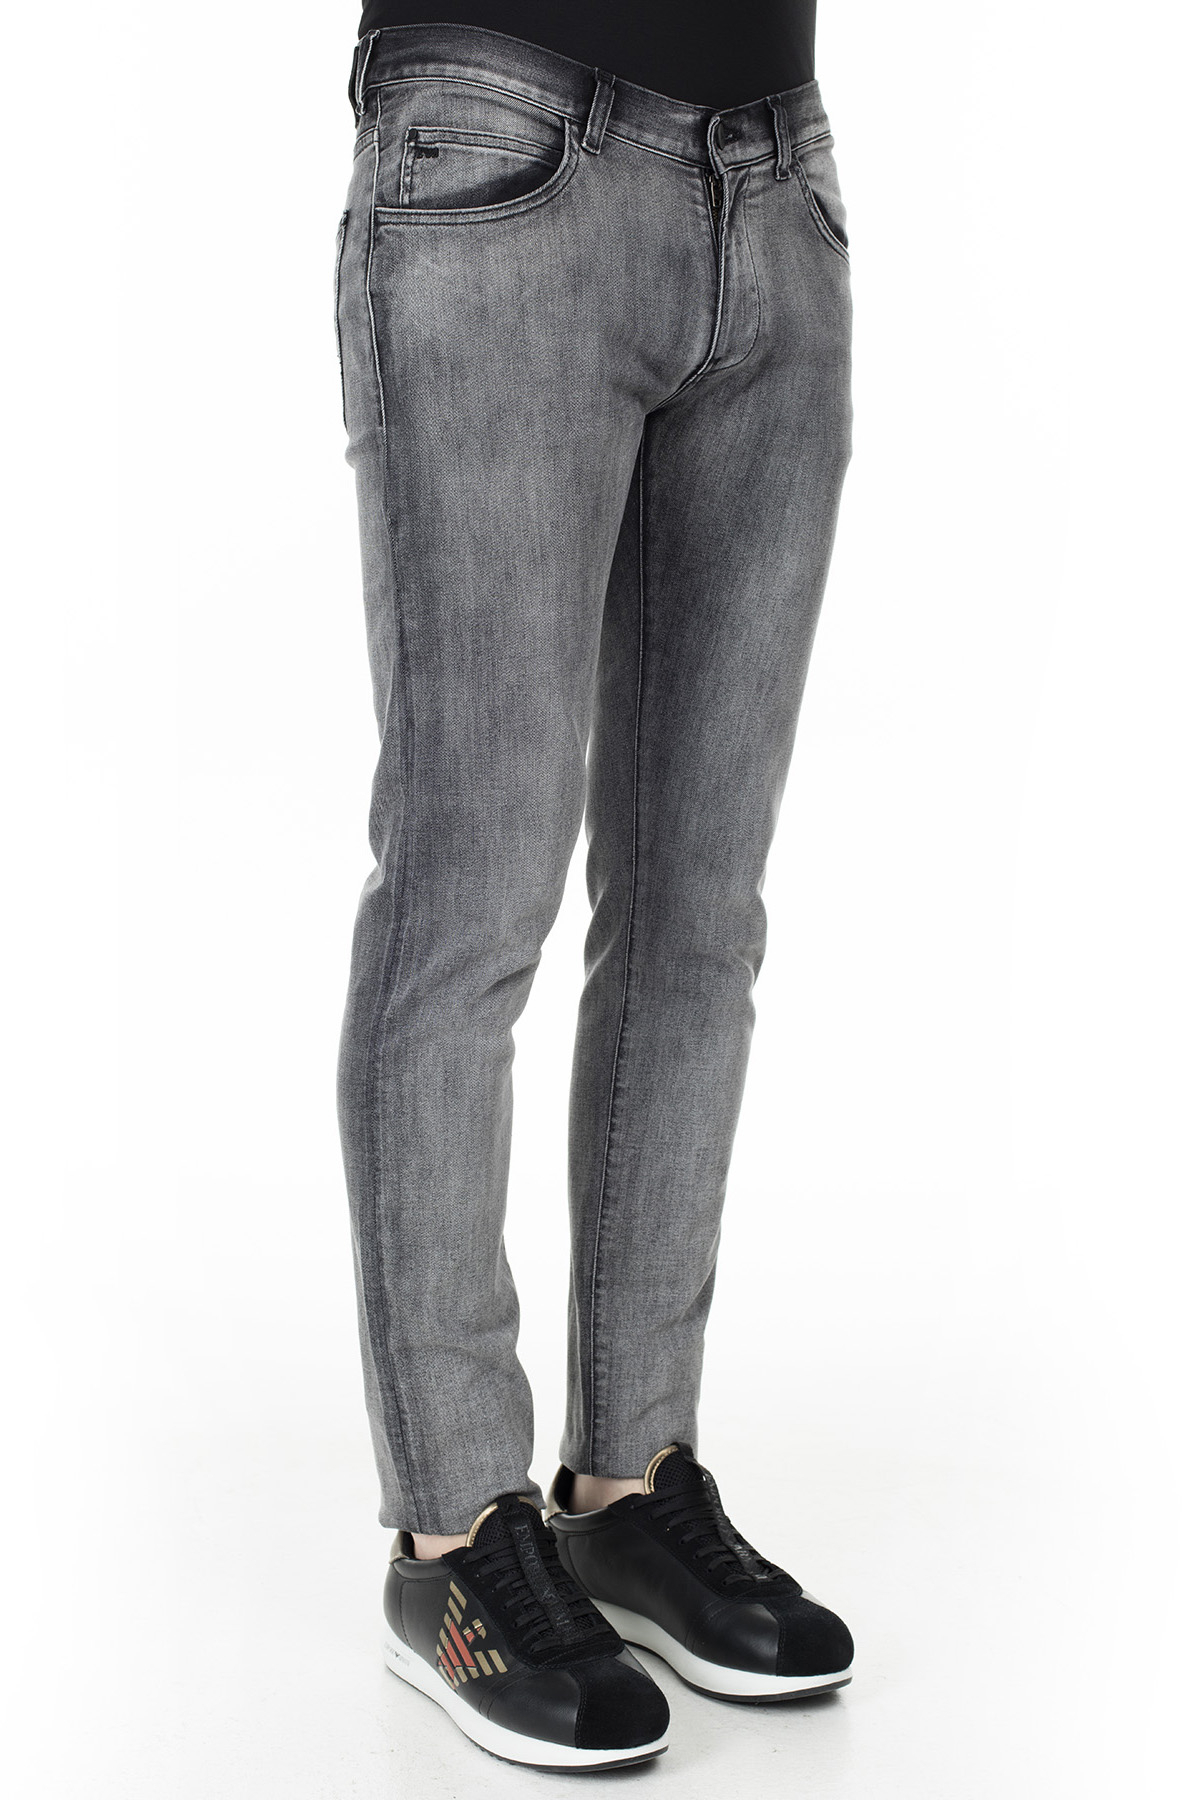 Emporio Armani J10 Jeans Erkek Kot Pantolon S 6G1J10 1D6MZ 0644 GRİ